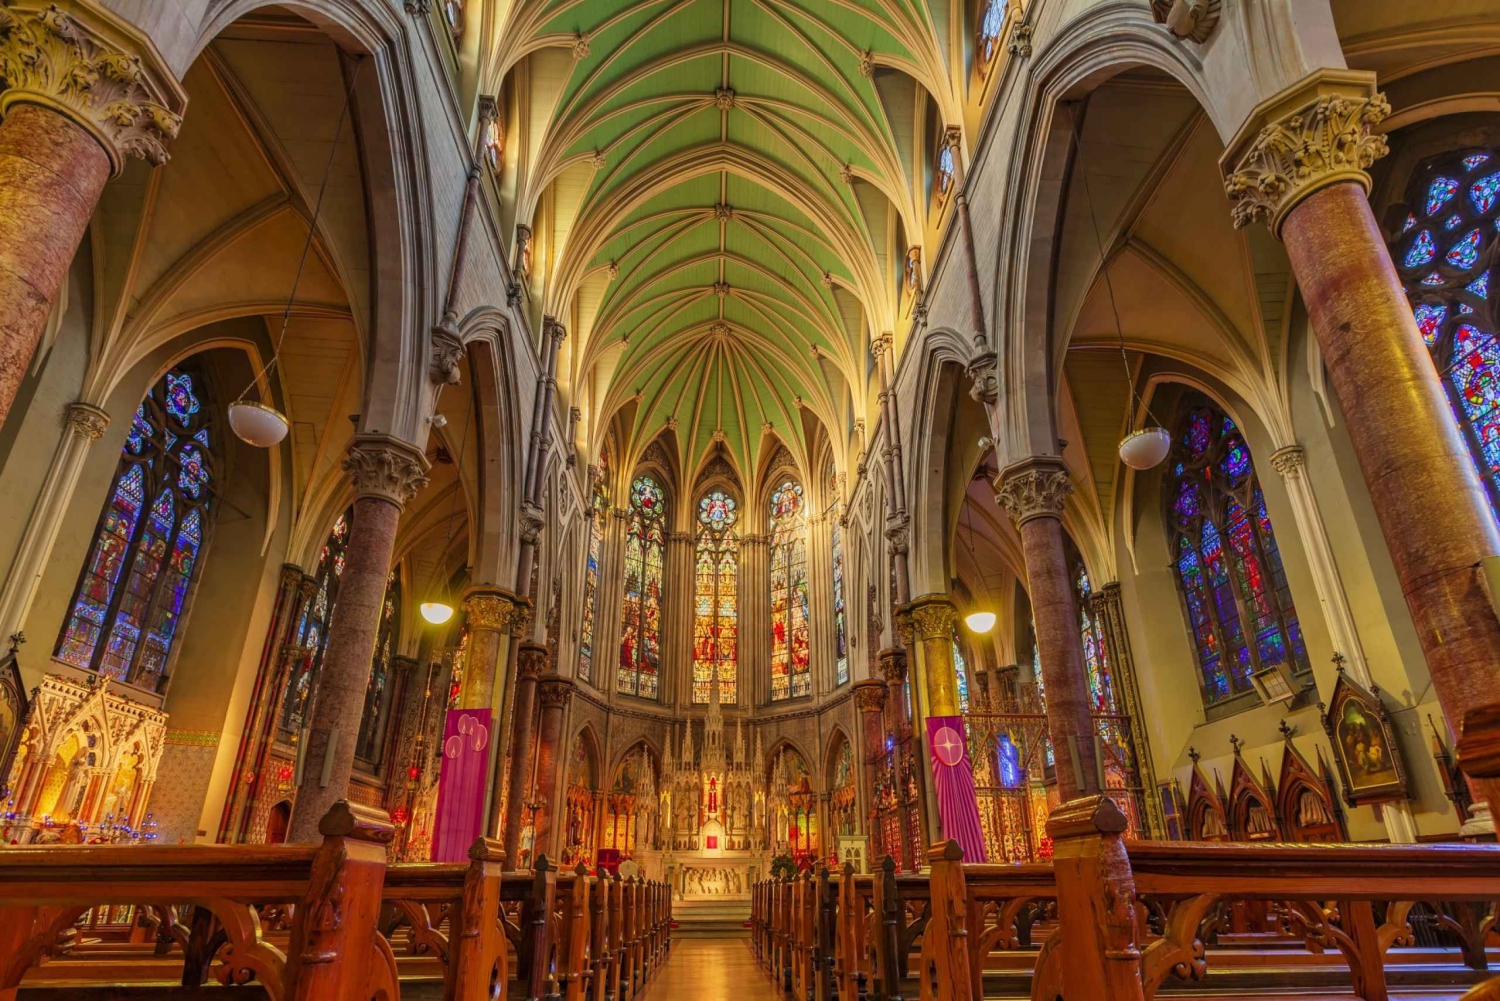 Irish Churches and Religion Private Walking Tour of Dublin